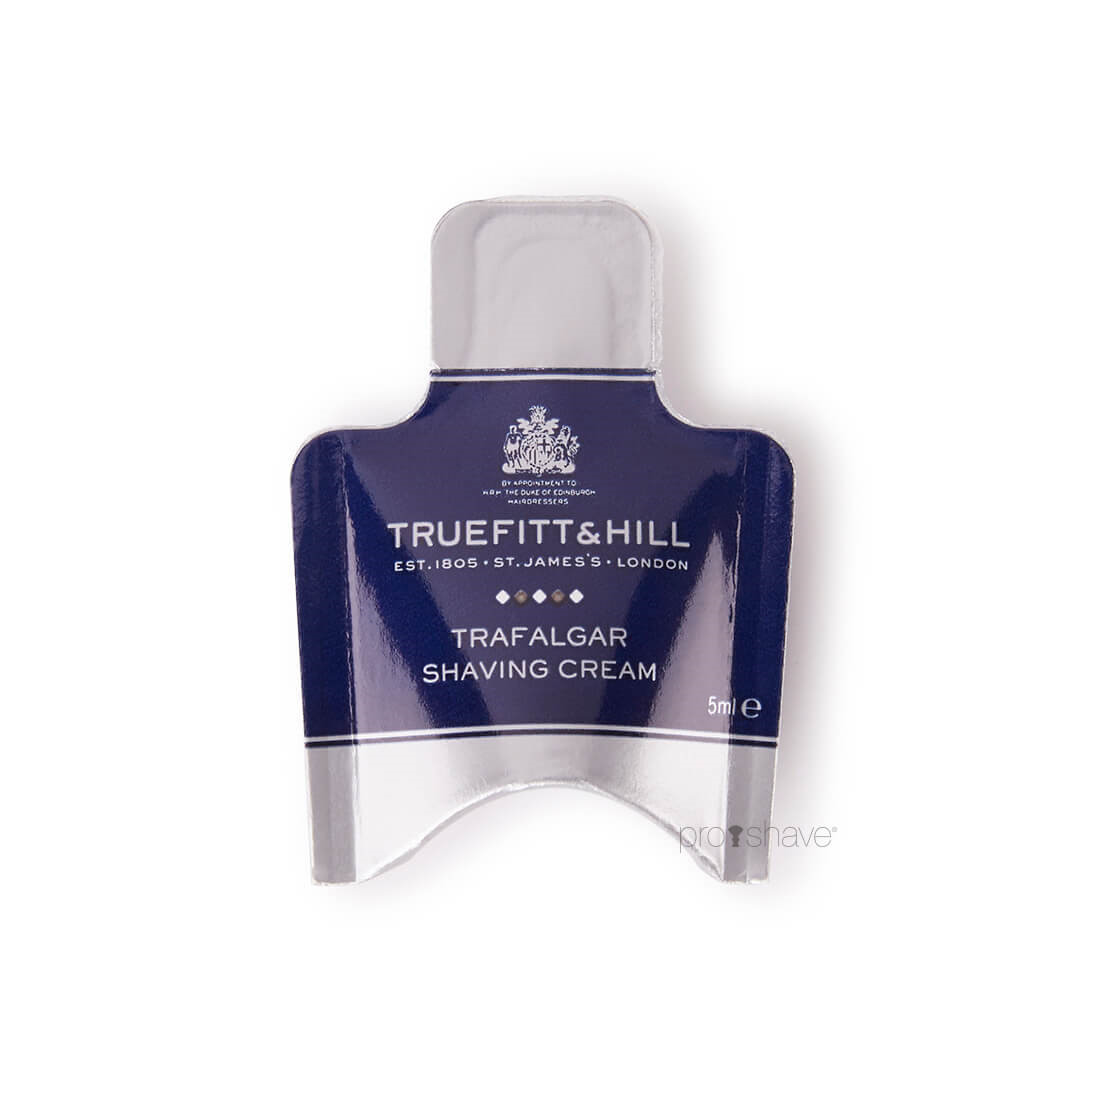 Se Truefitt & Hill Trafalgar Shaving Cream Sample Pack, 5 ml. hos Proshave